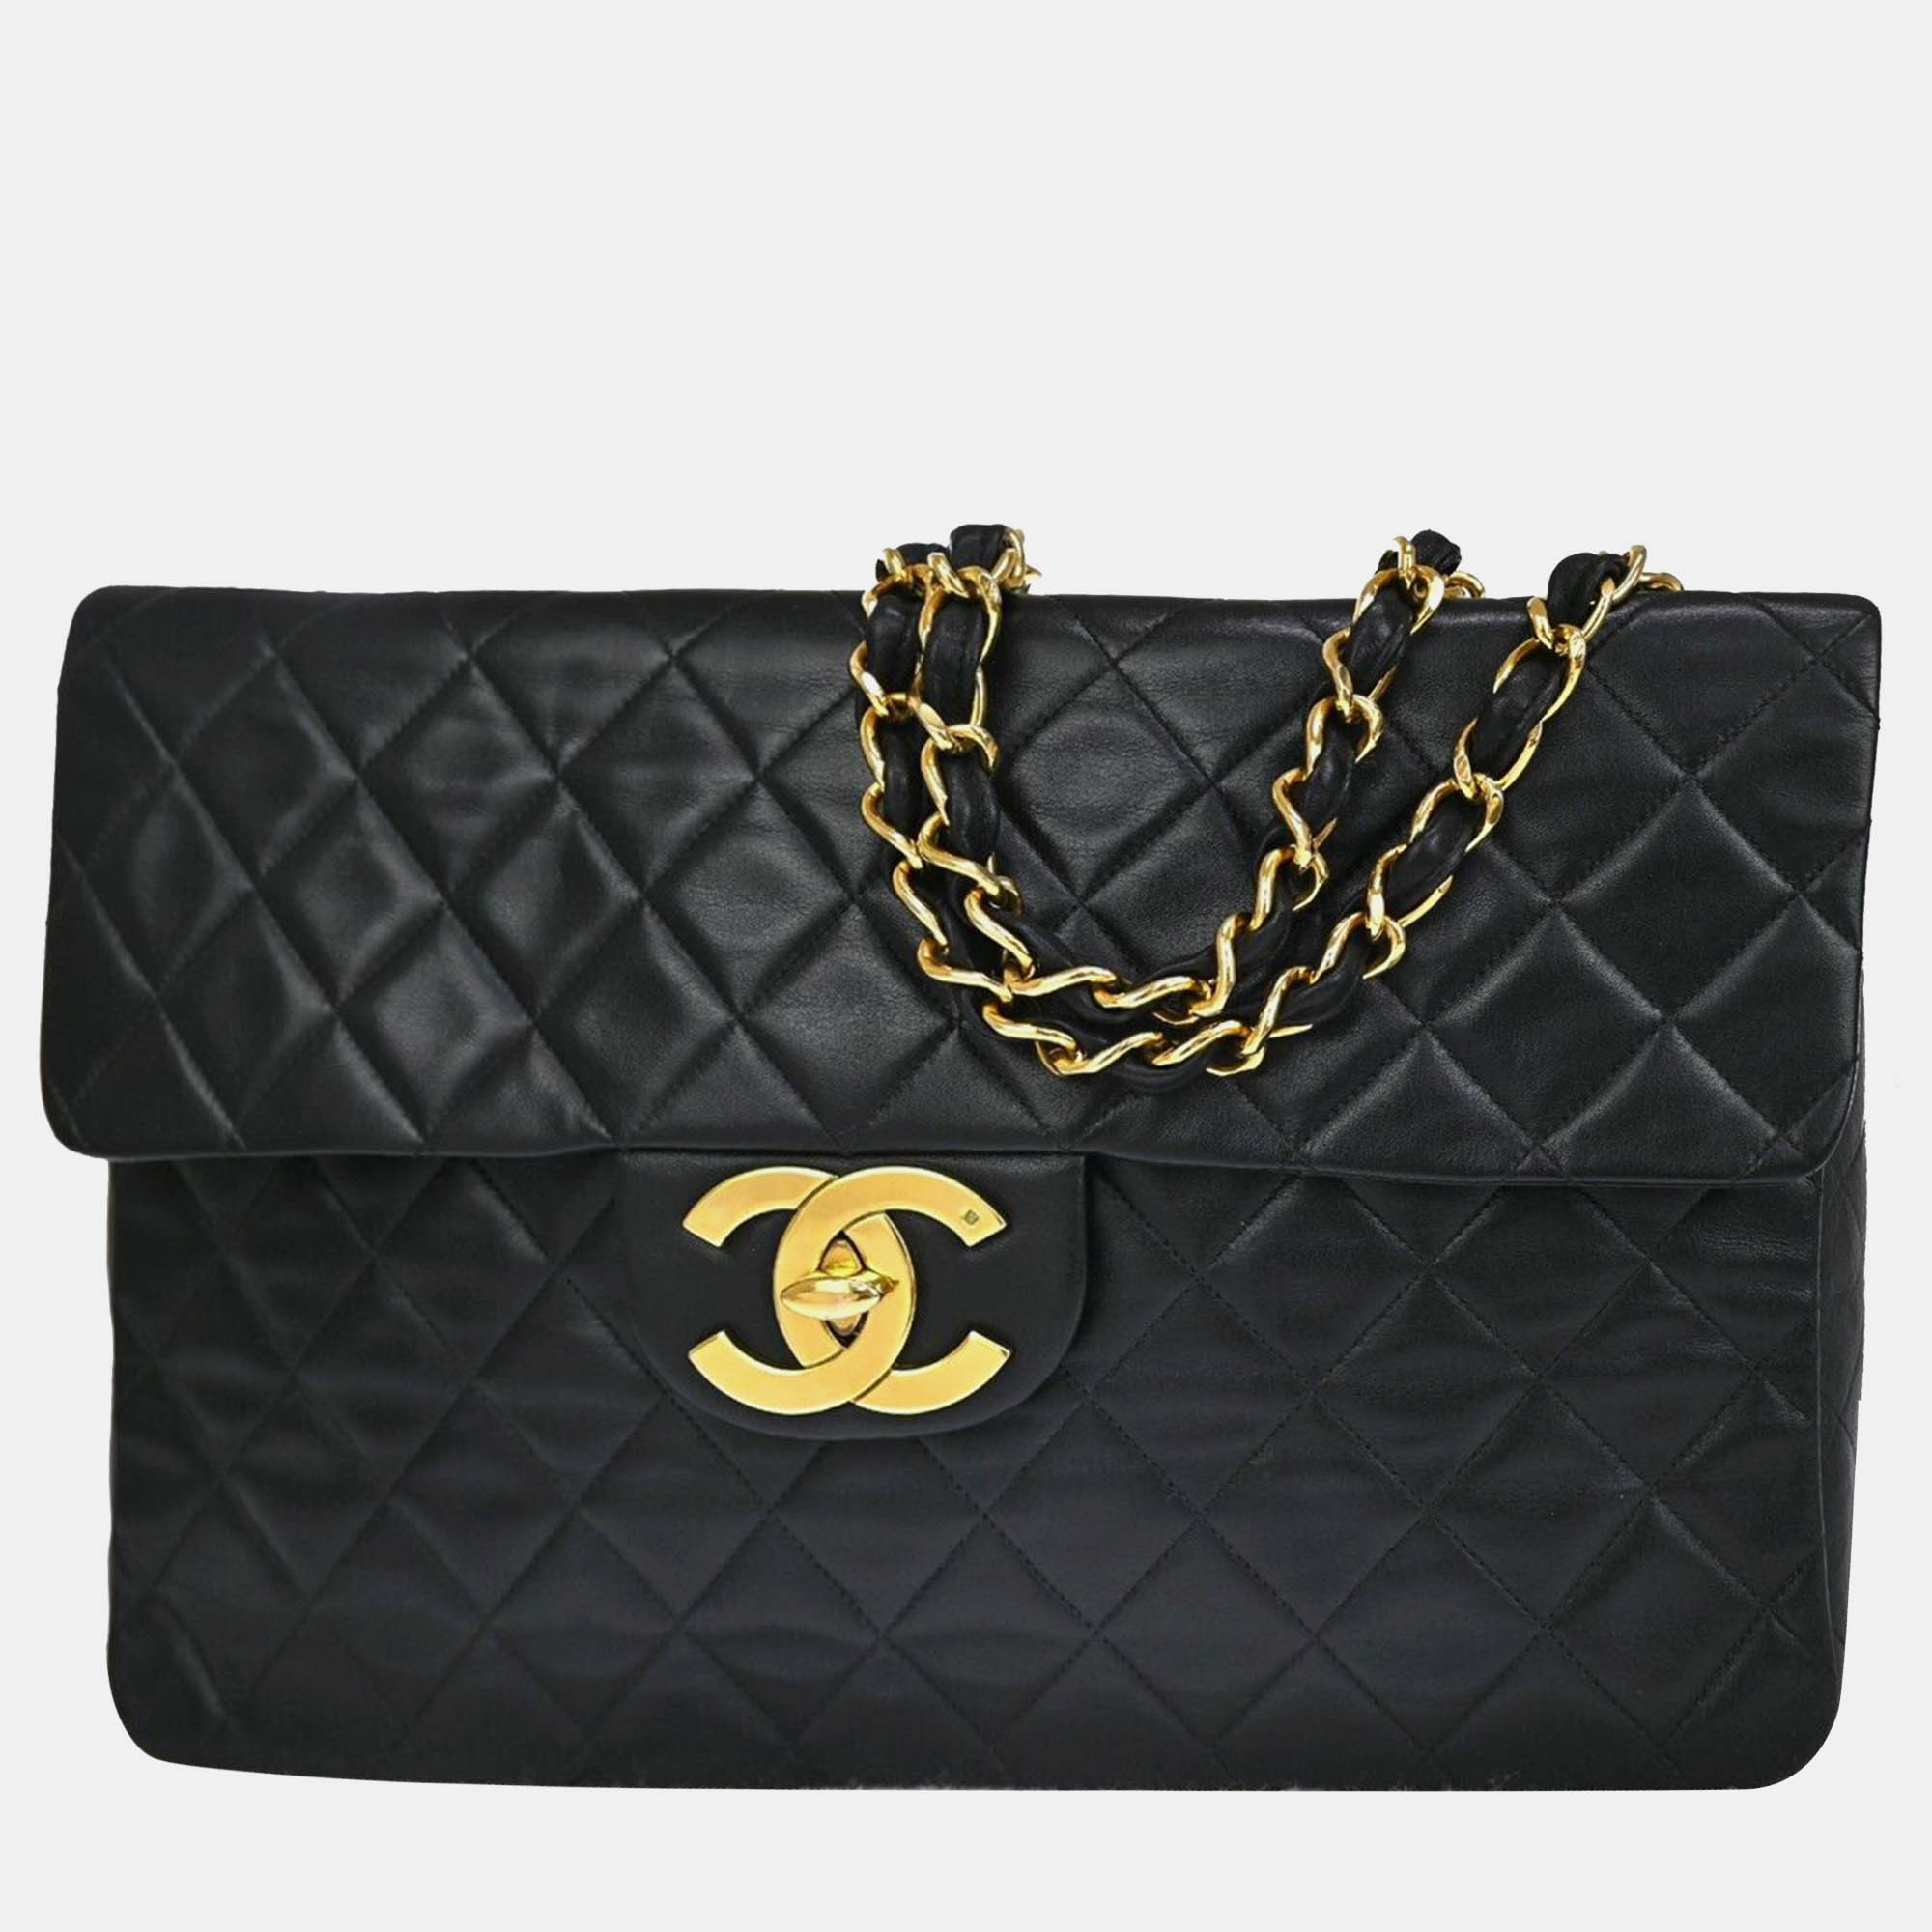 Chanel black leather maxi classic single flap bag